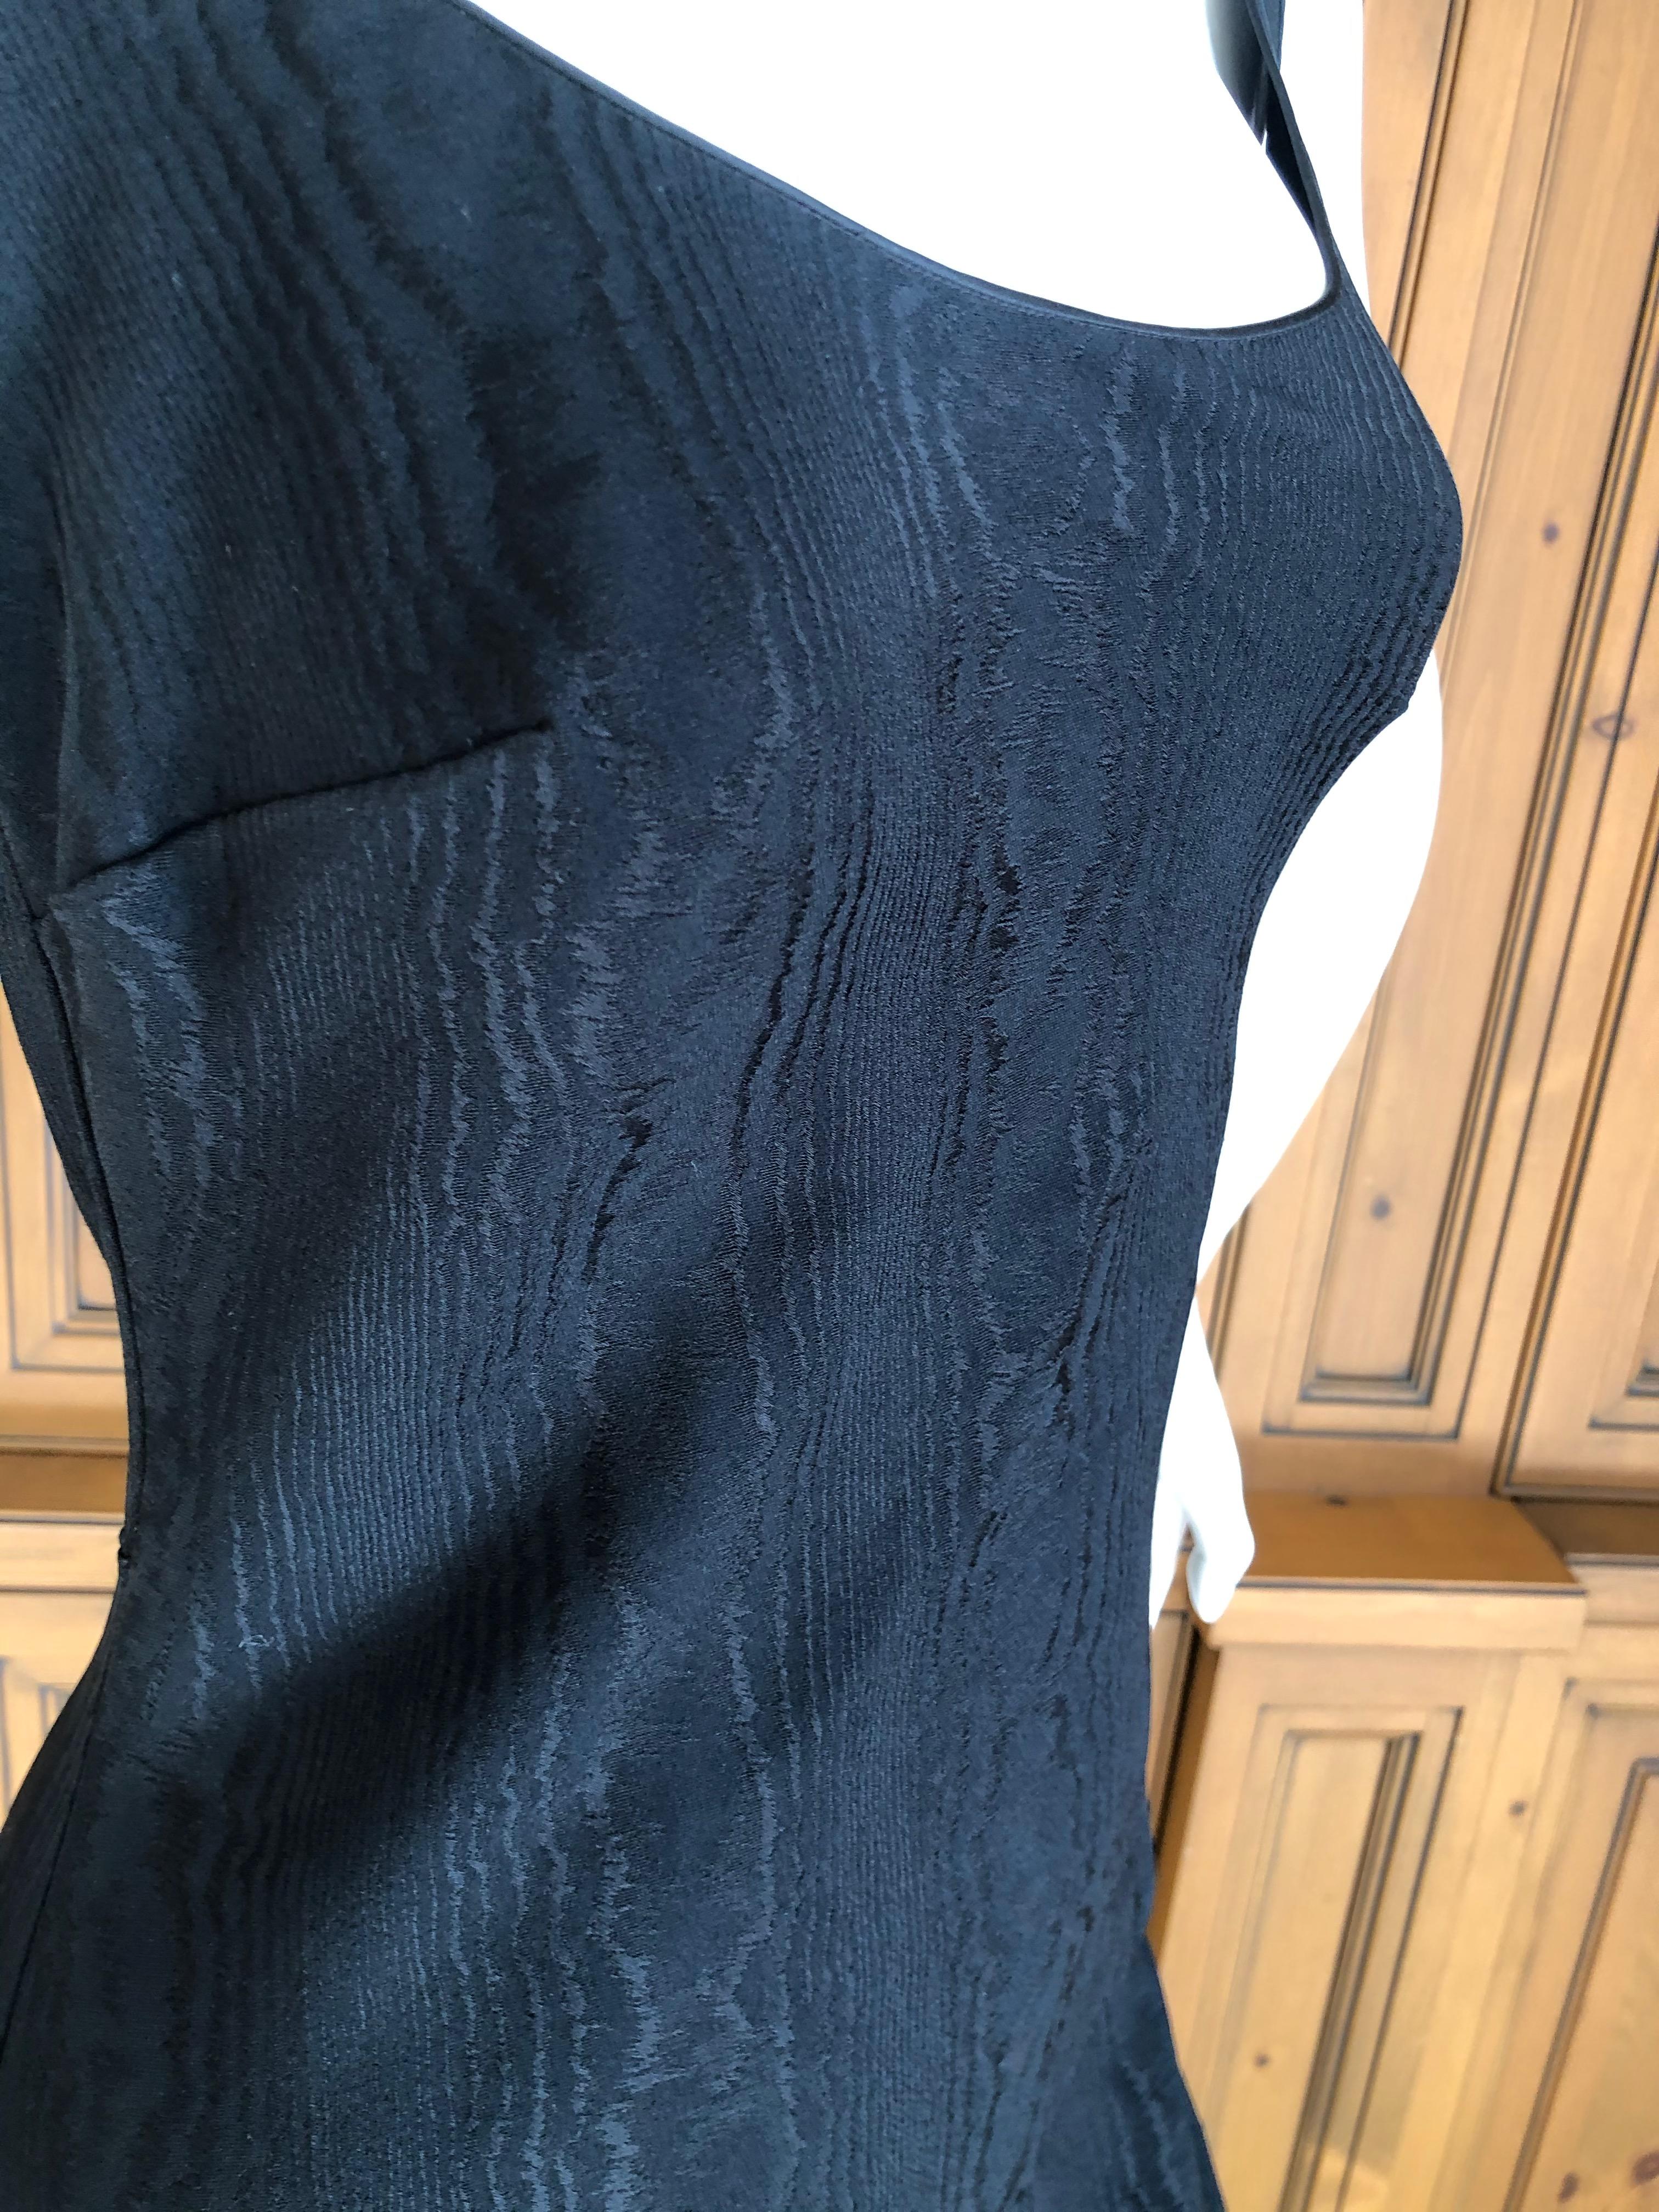 John Galliano Vintage 1999 Bias Cut Wood Grain Pattern Black Evening Dress For Sale 4